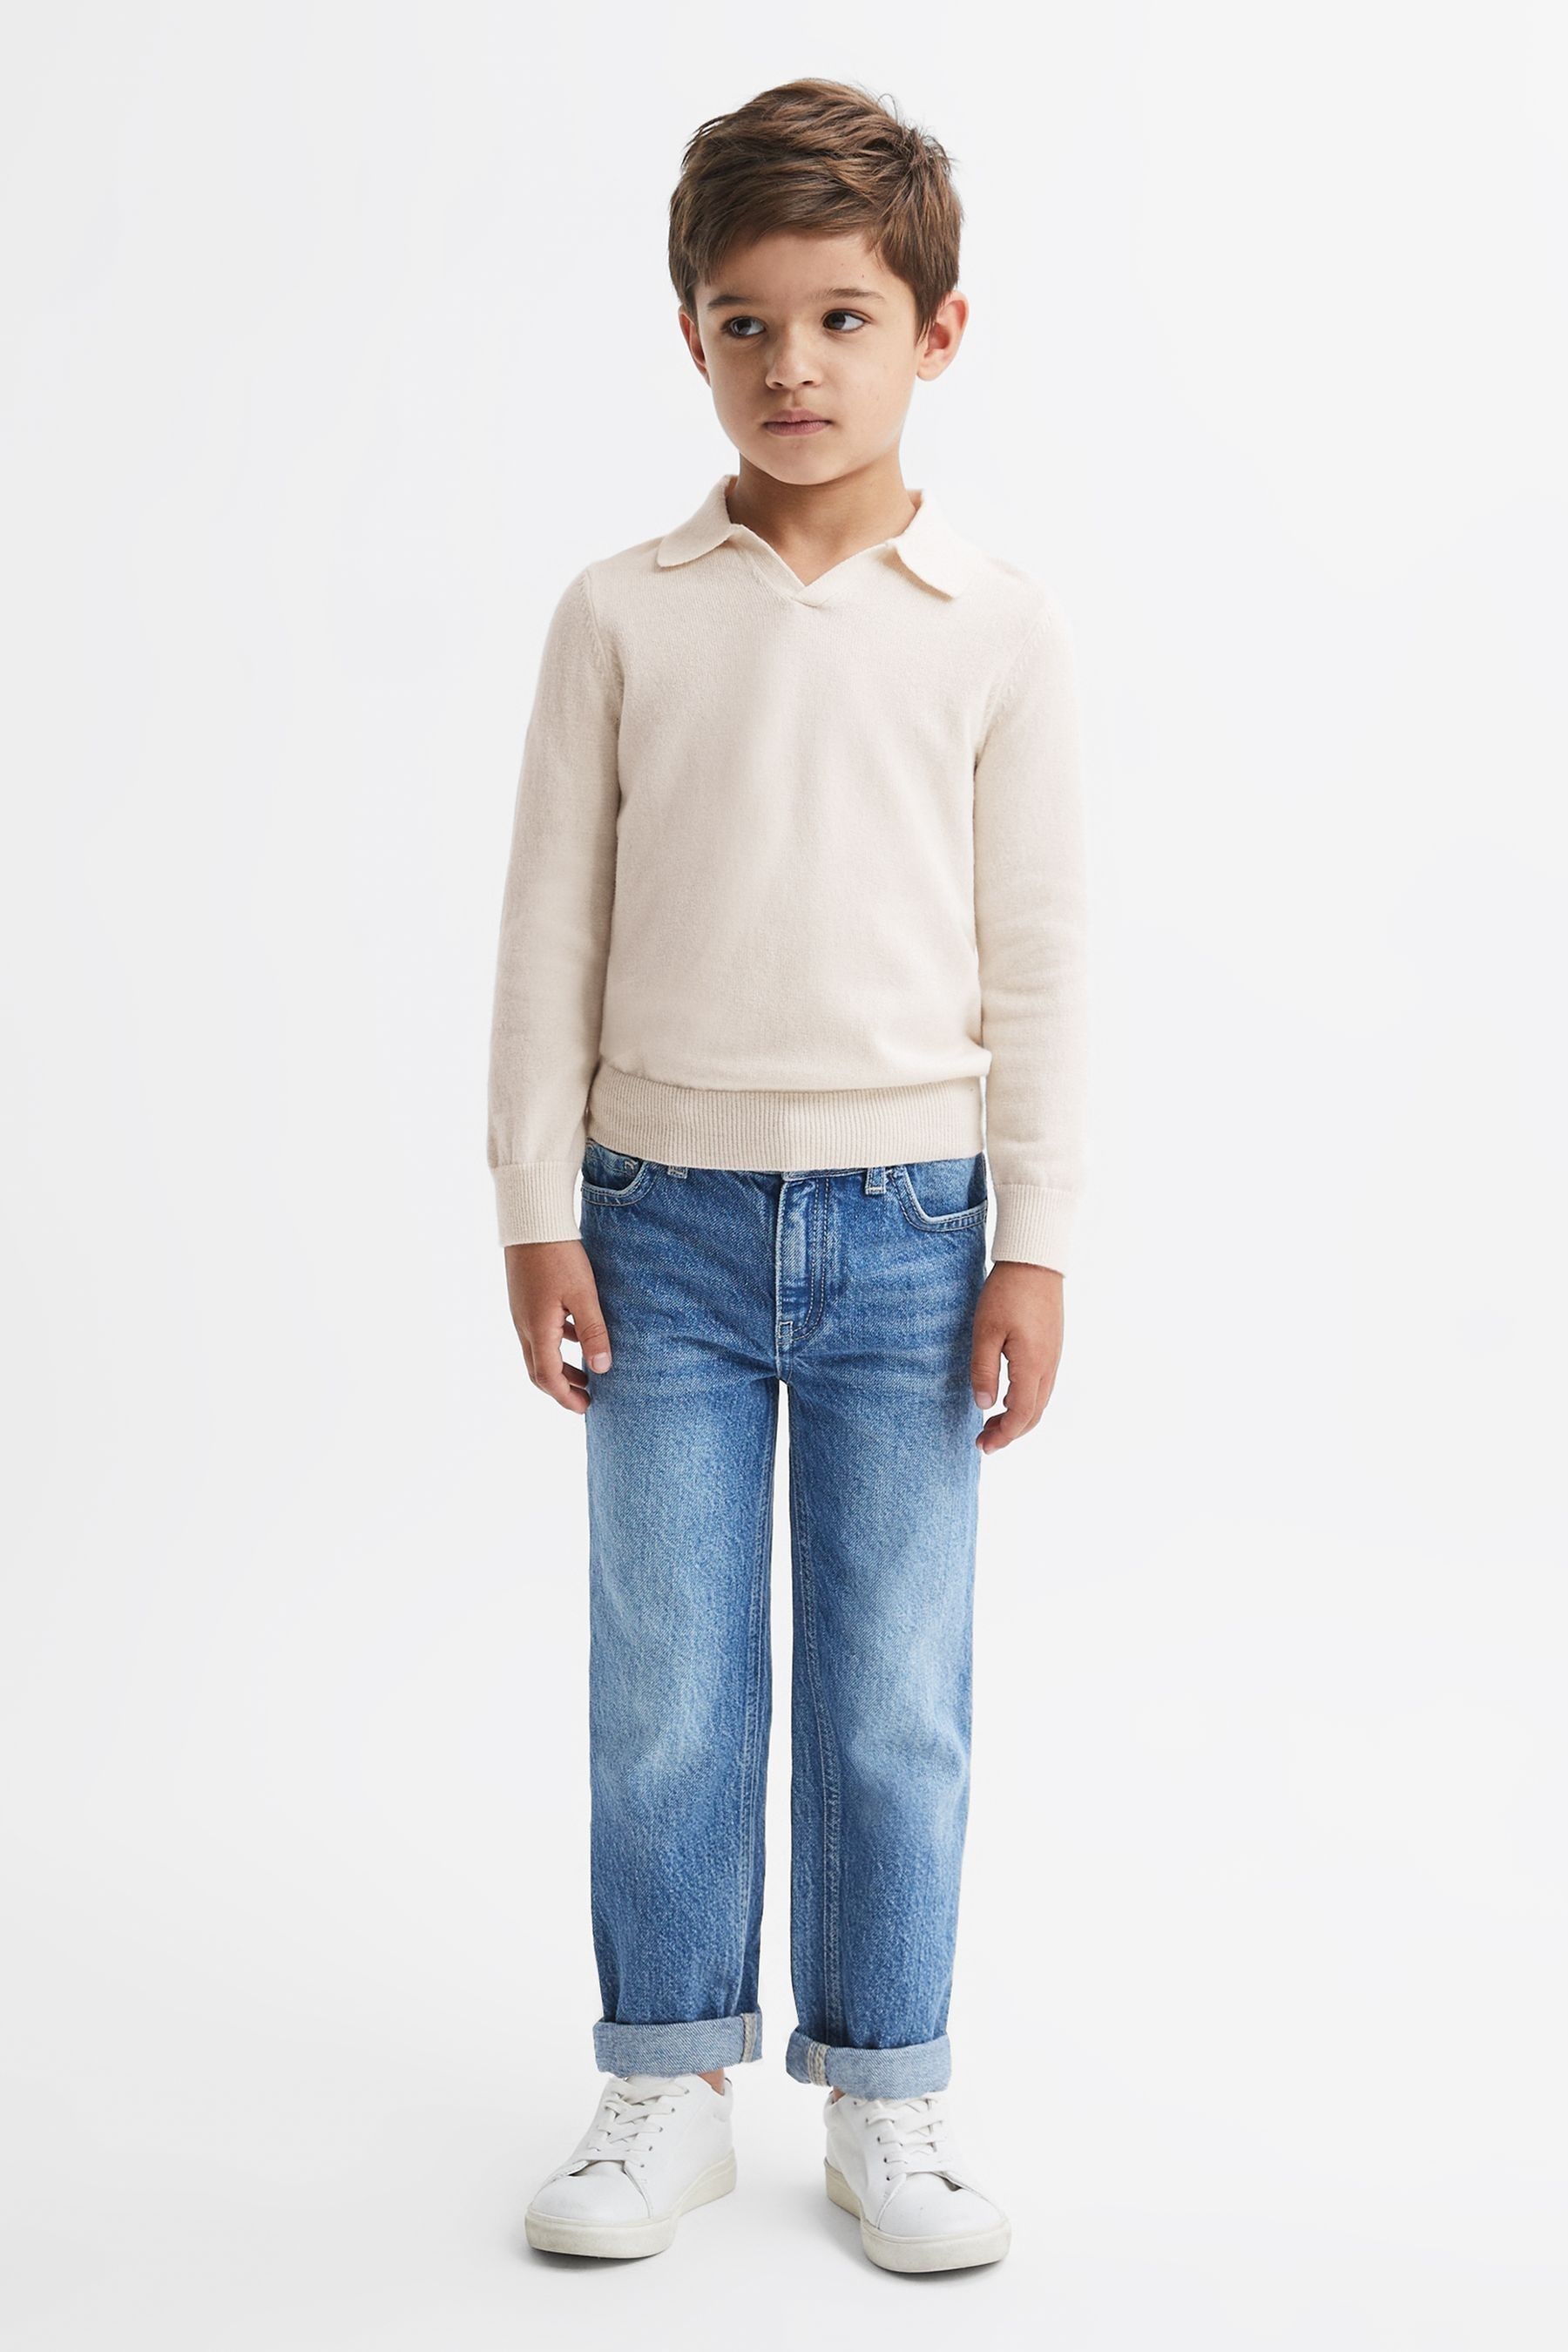 Reiss Swifts - Milk Junior Slim Fit Merino Wool Open Collar Top, Uk 7-8 Yrs